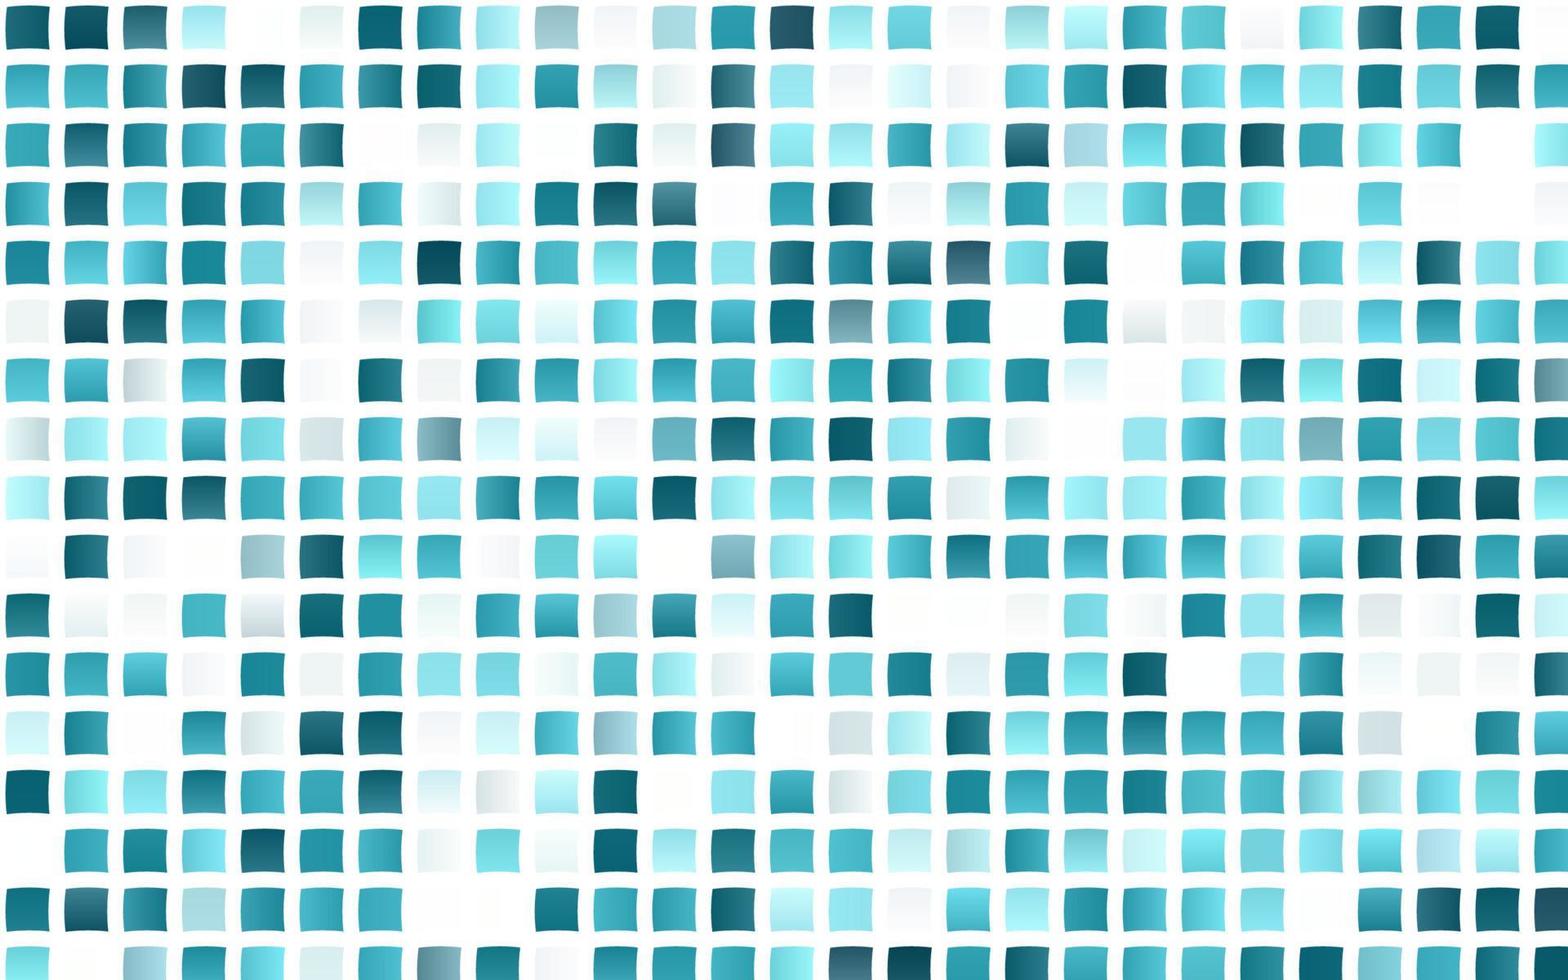 capa de vetor azul claro em estilo poligonal.